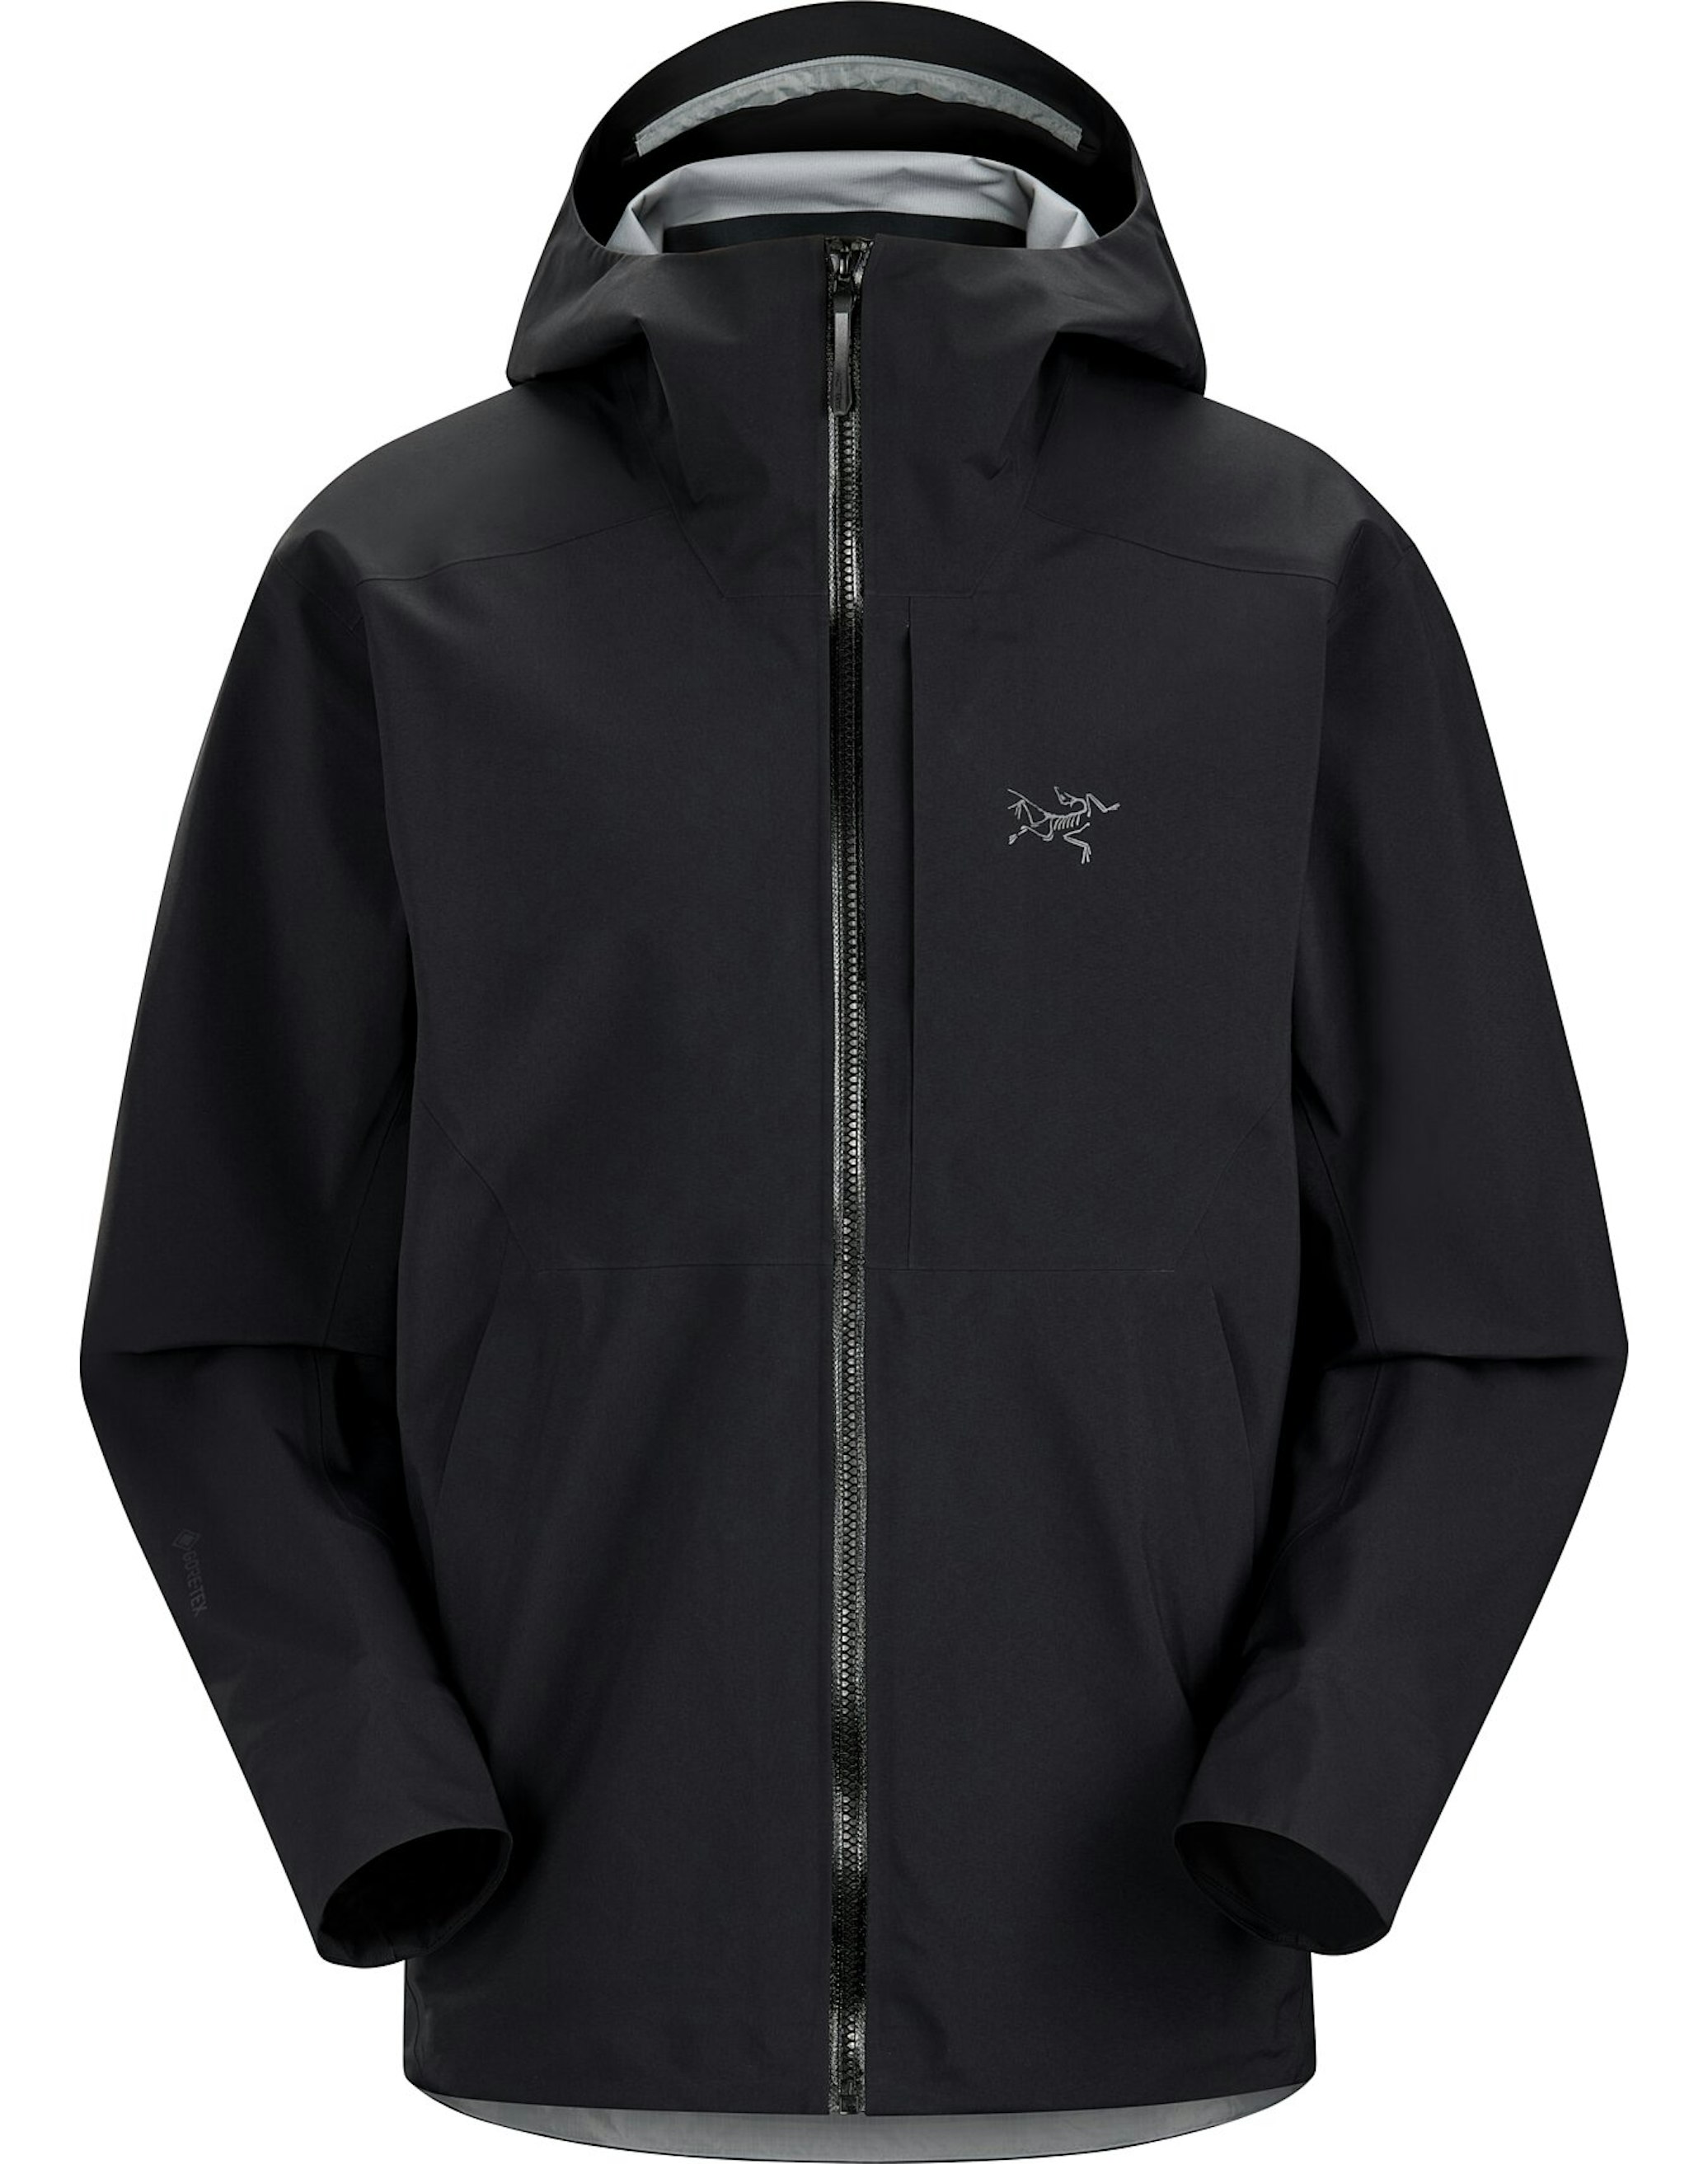 Ralle Jacket Men's | Arc'teryx